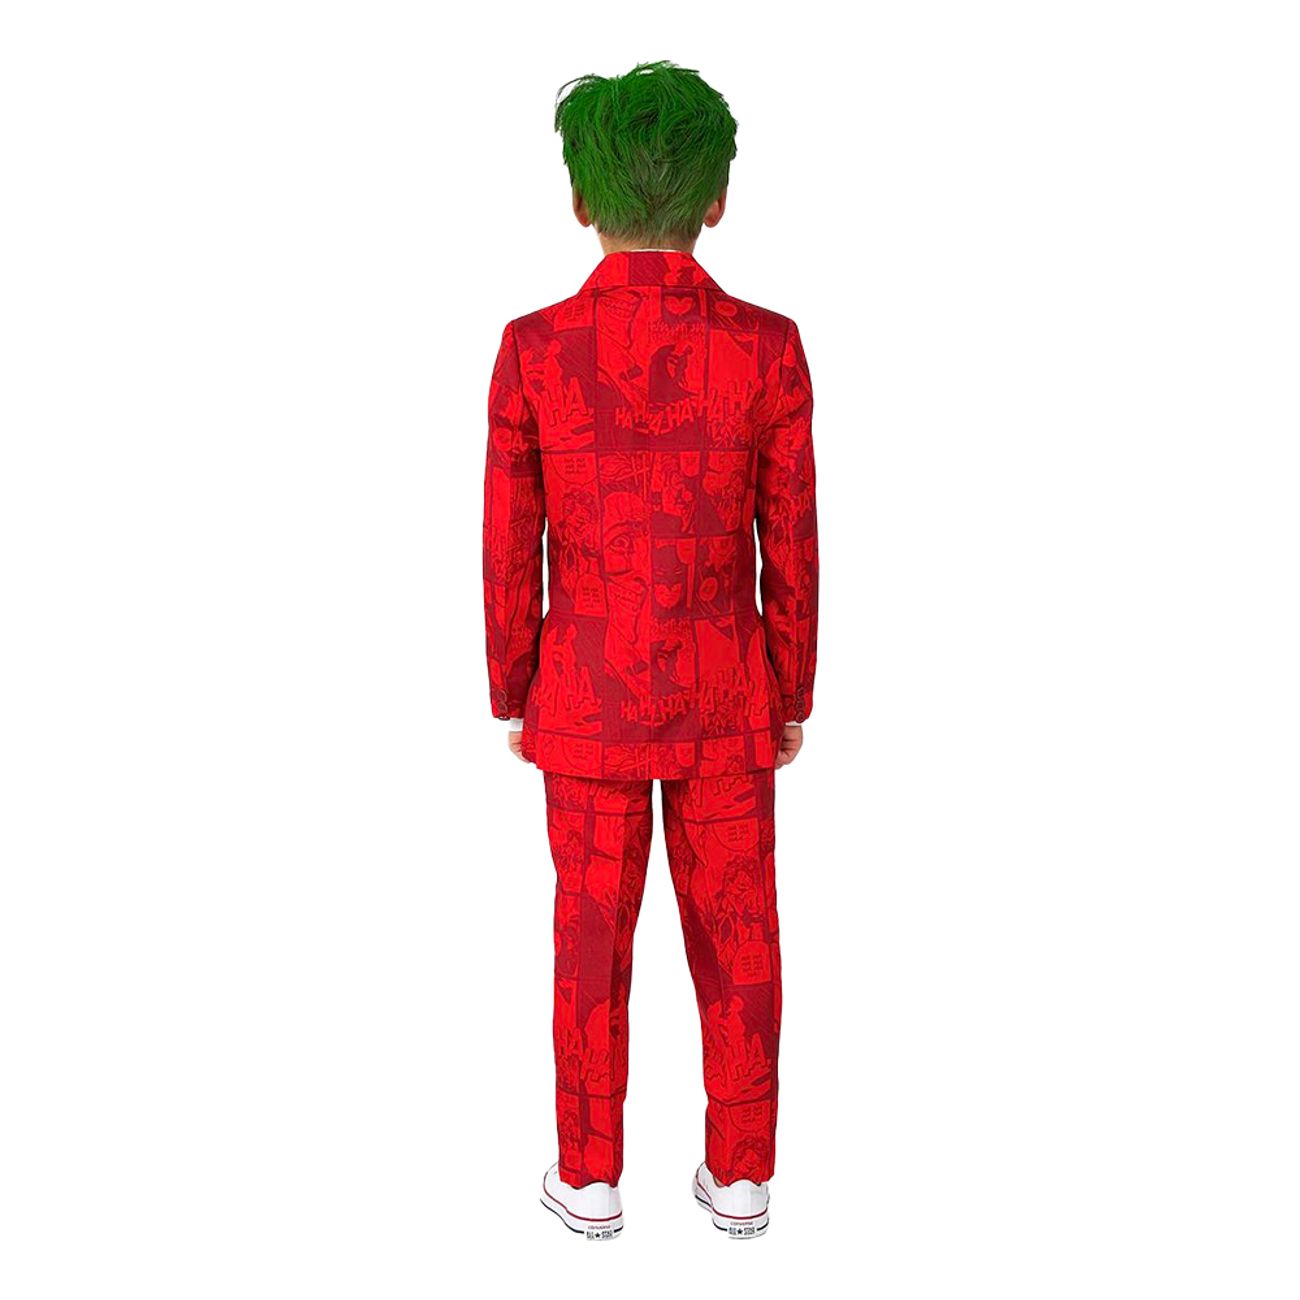 suitmeister-scarlet-joker-boys-kostym-81409-3